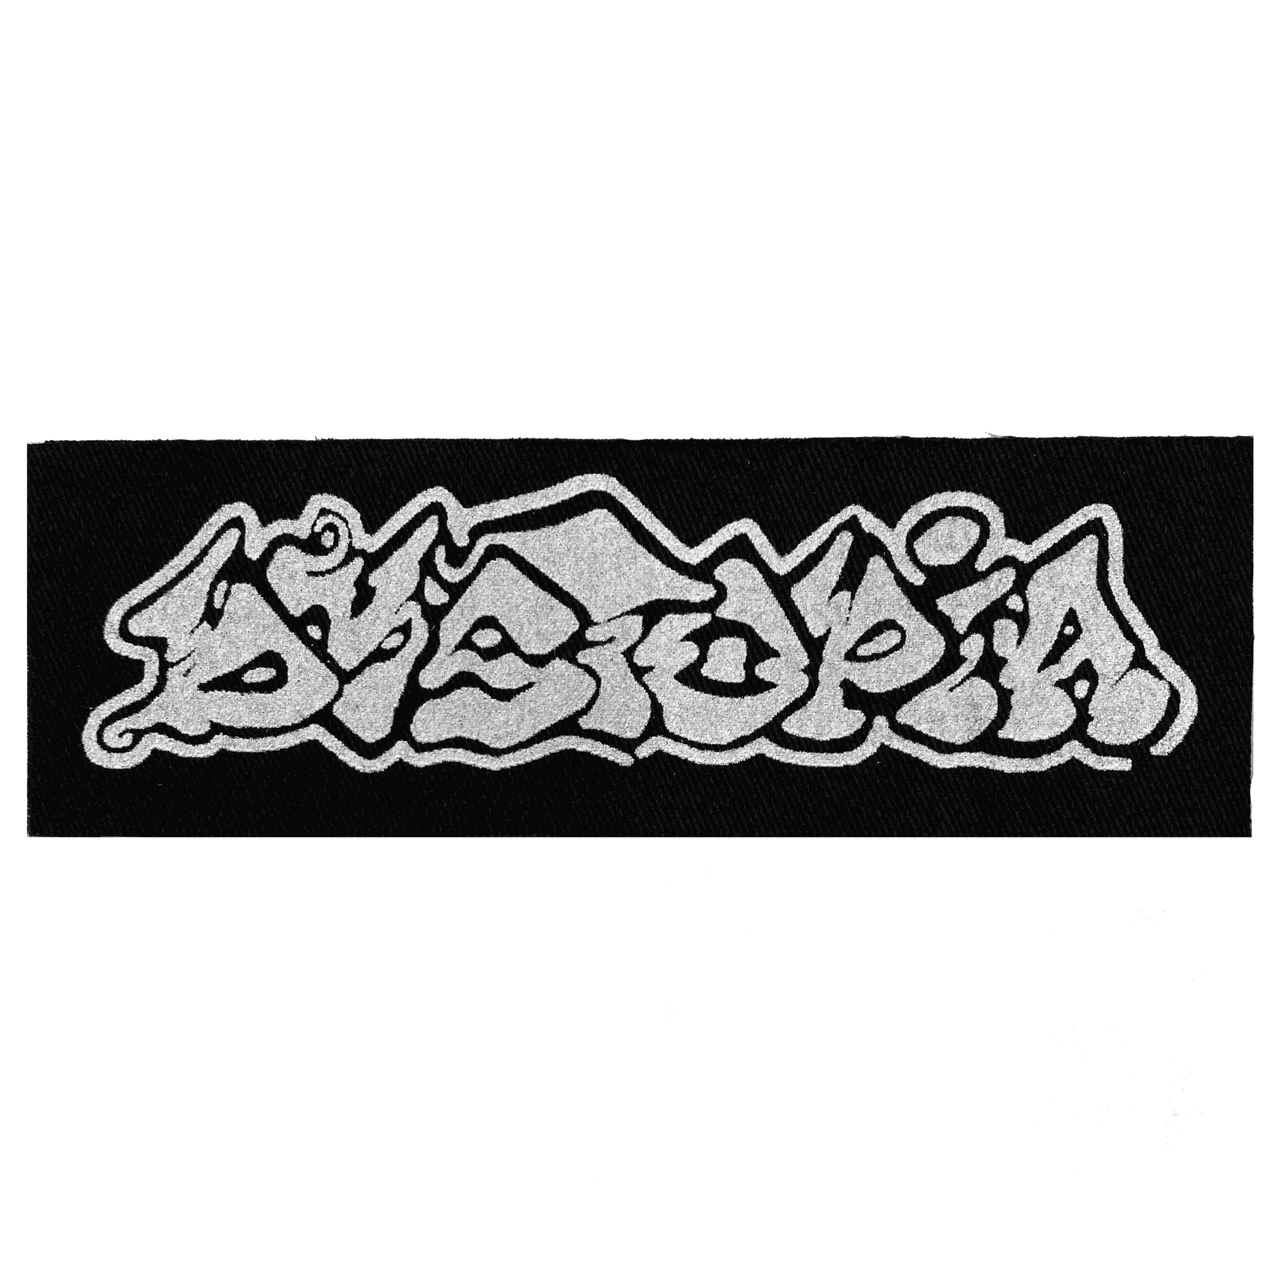 Dystopia Logo Cloth Patch